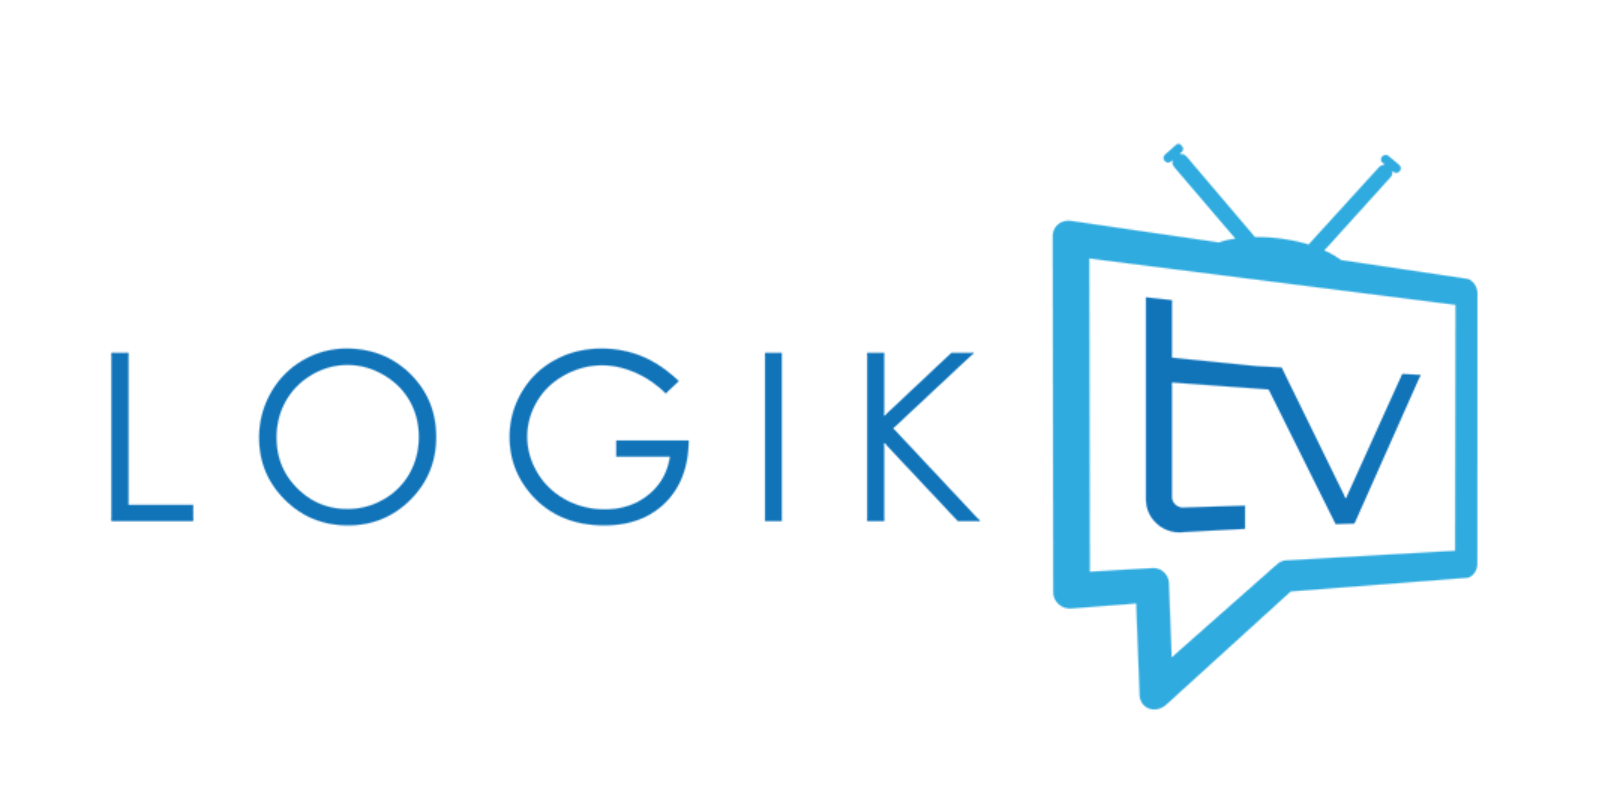 Blue TV Logo - Logik TV - Legal Logik